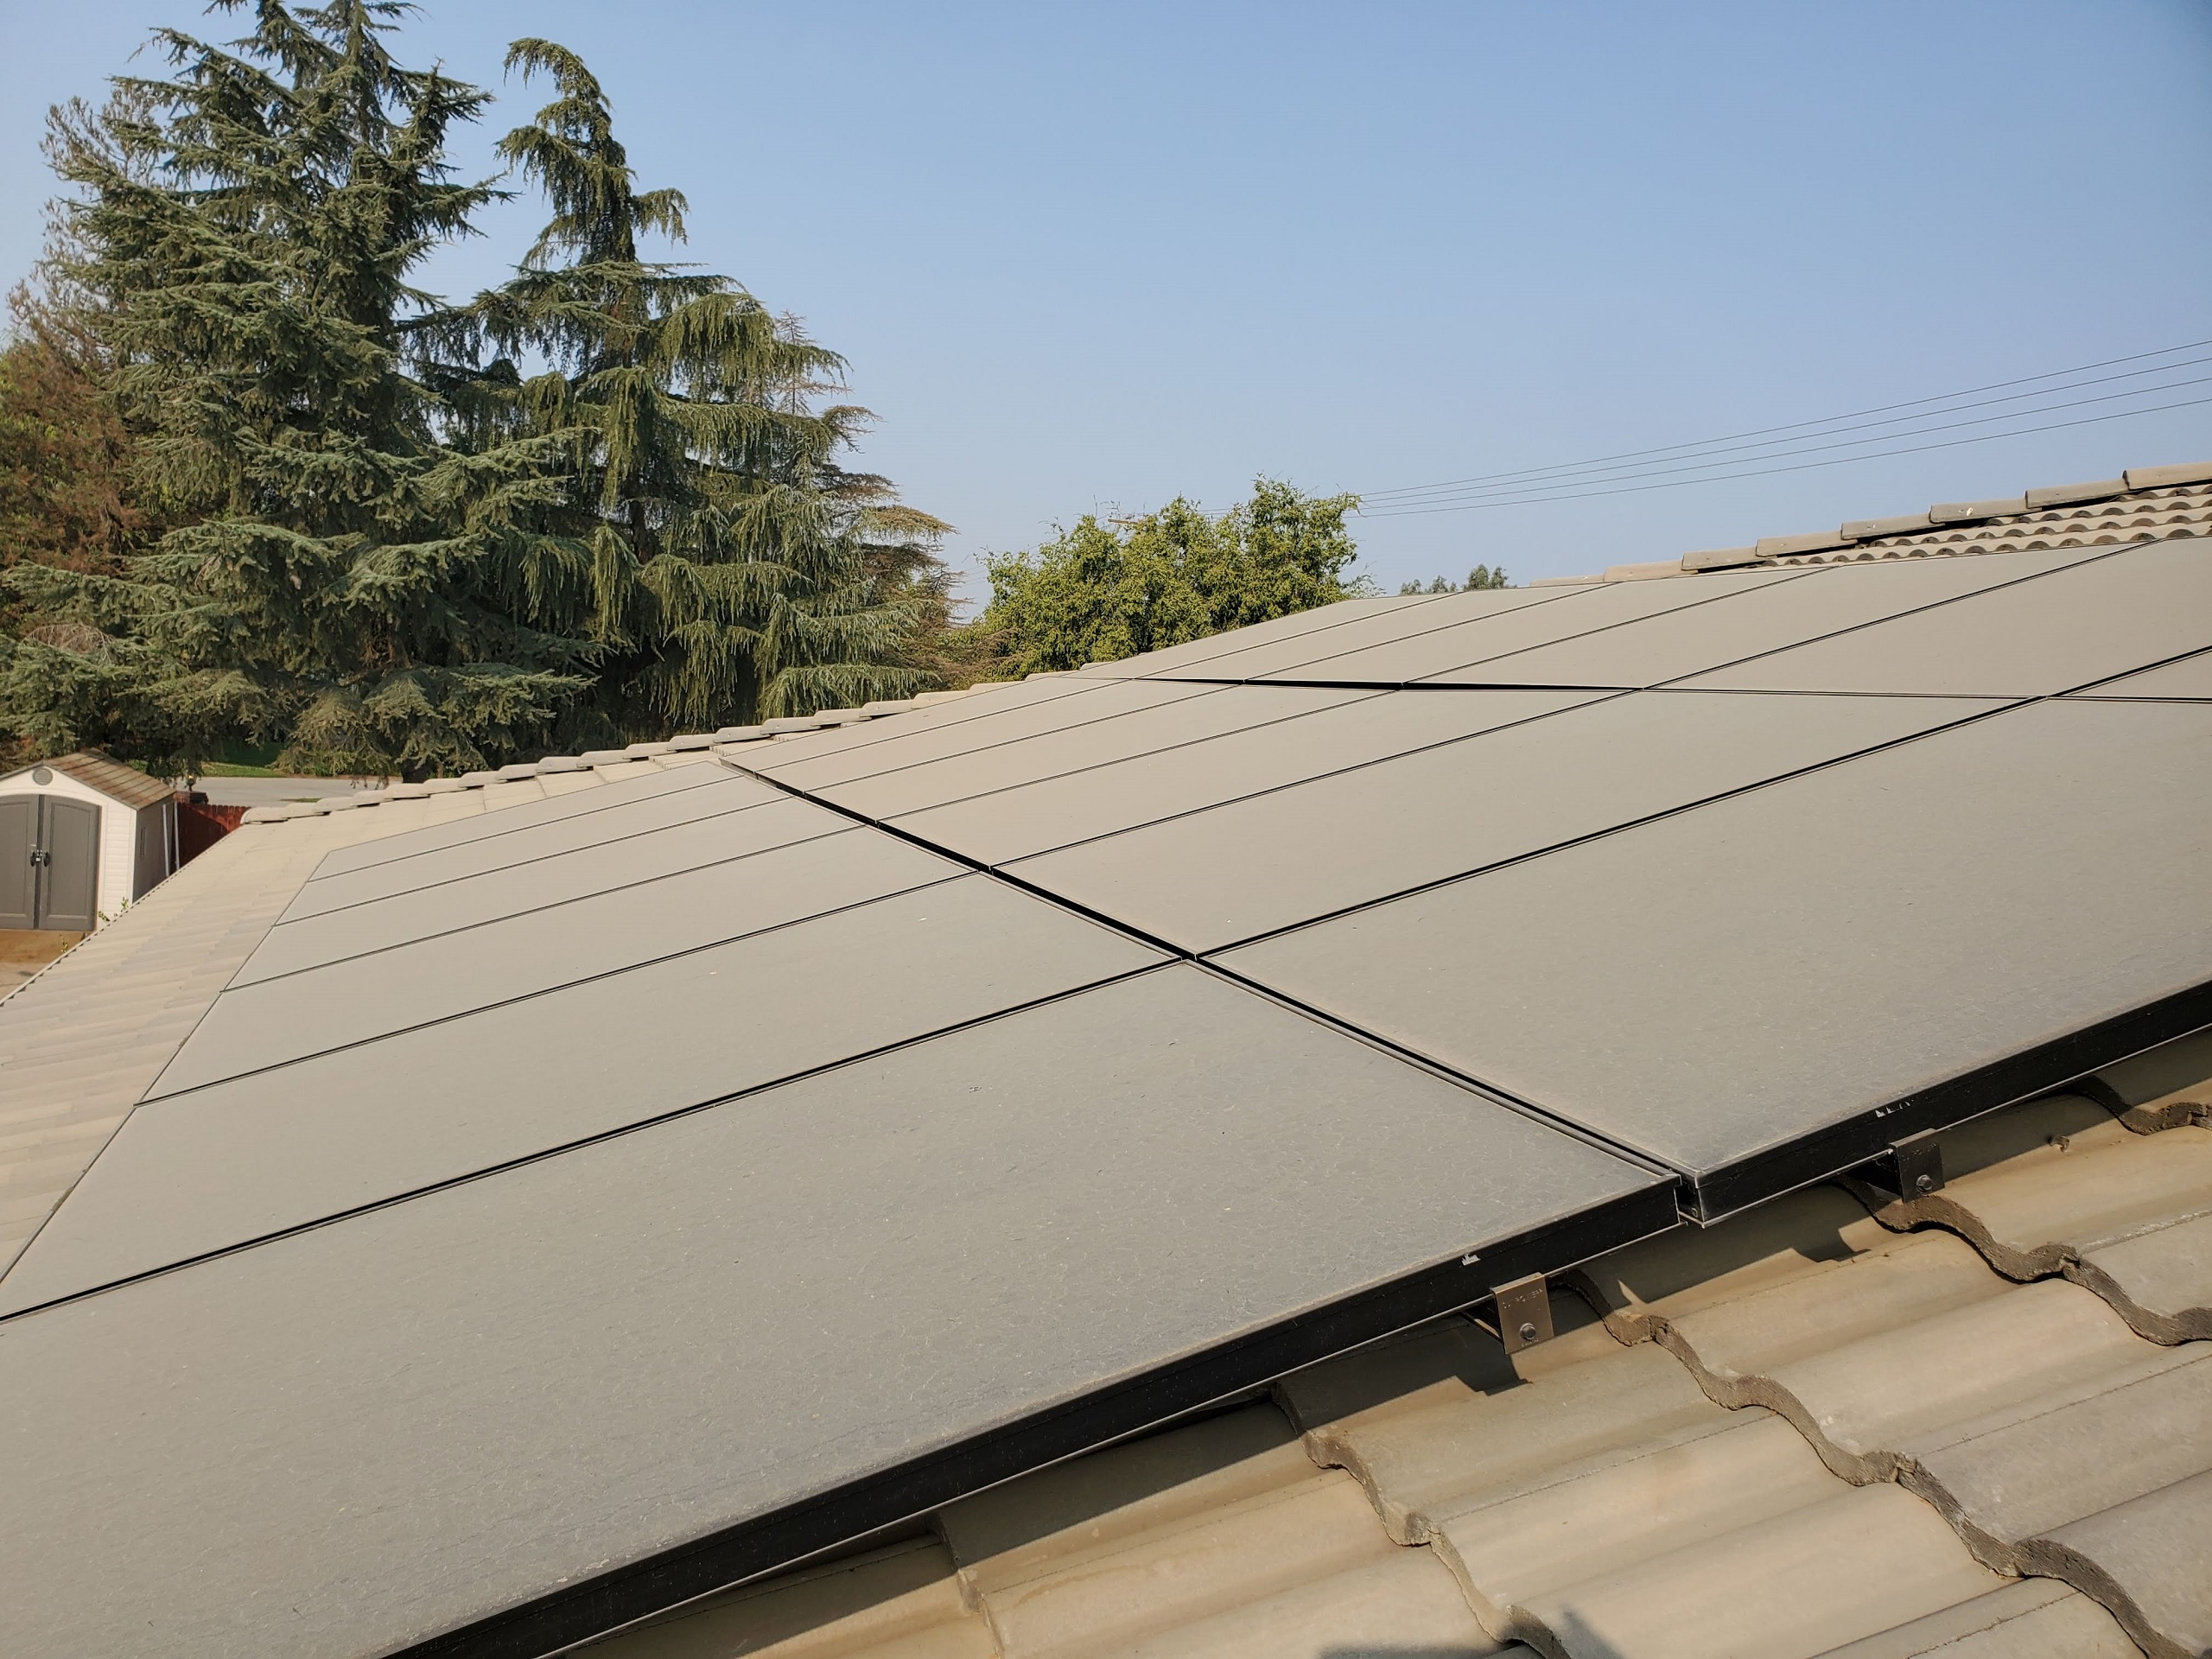 Dirty SunPower solar panels